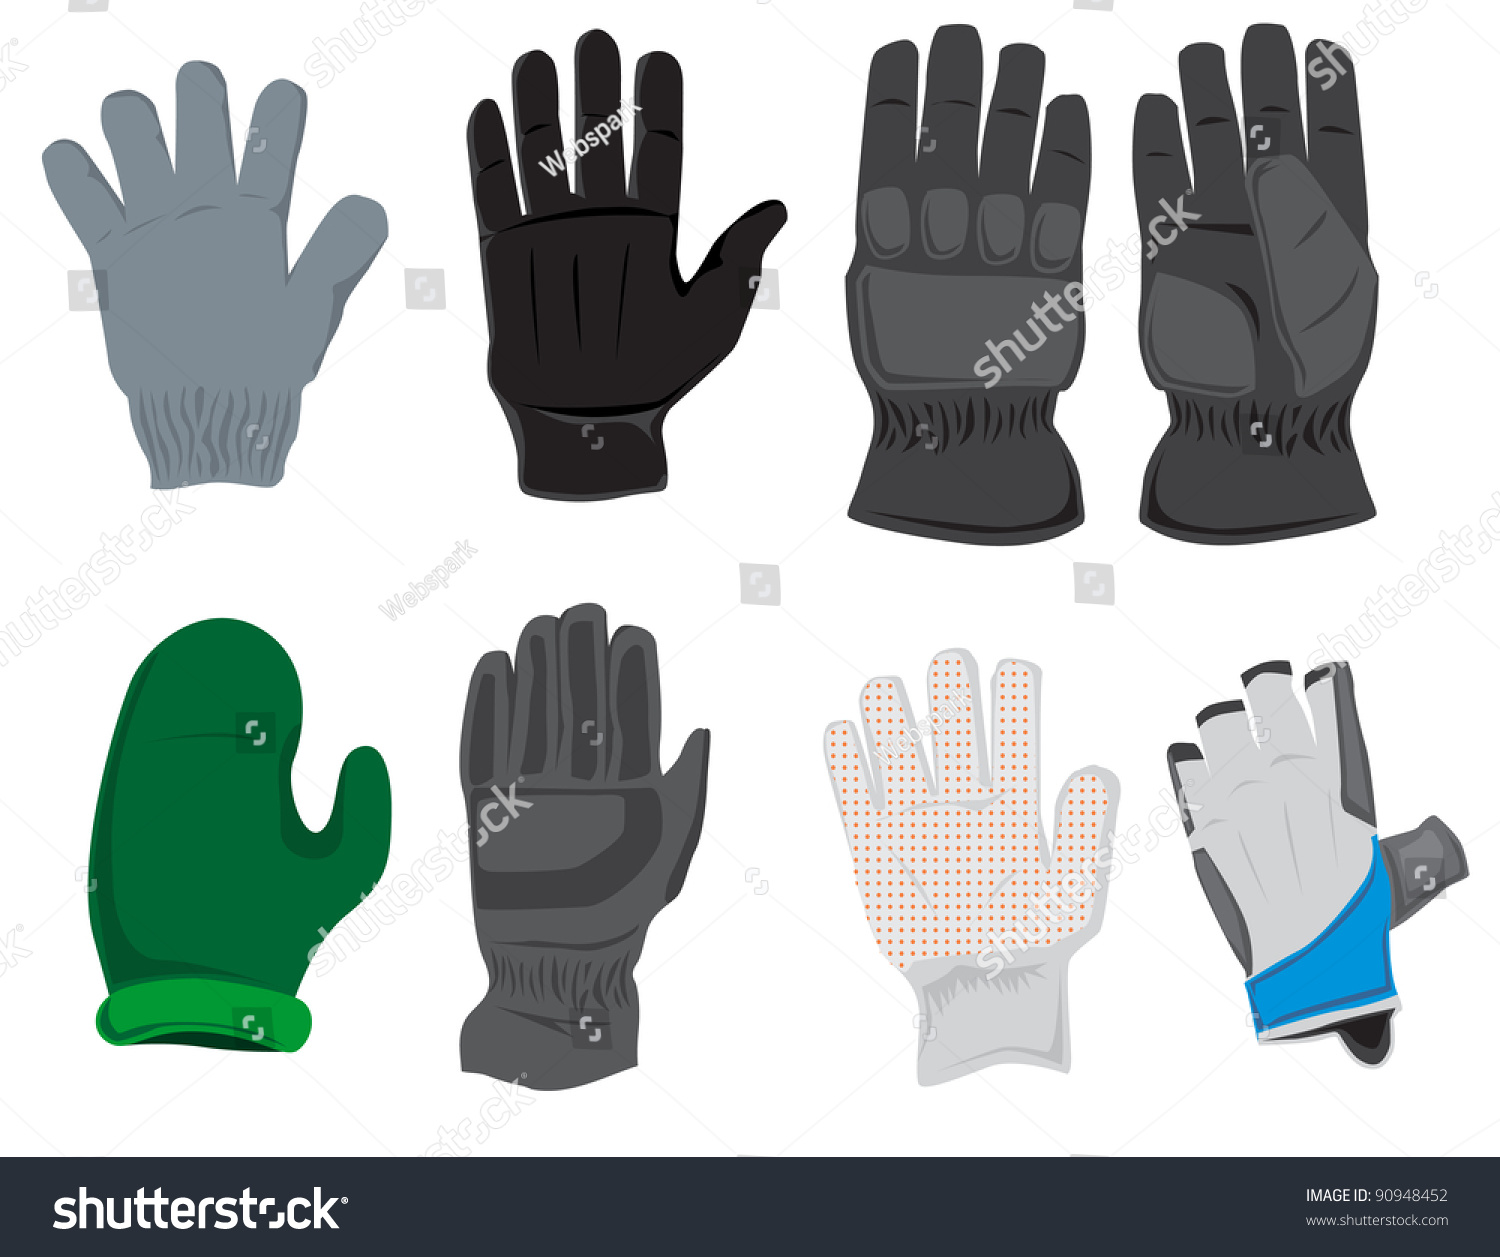 football gloves clipart - photo #30